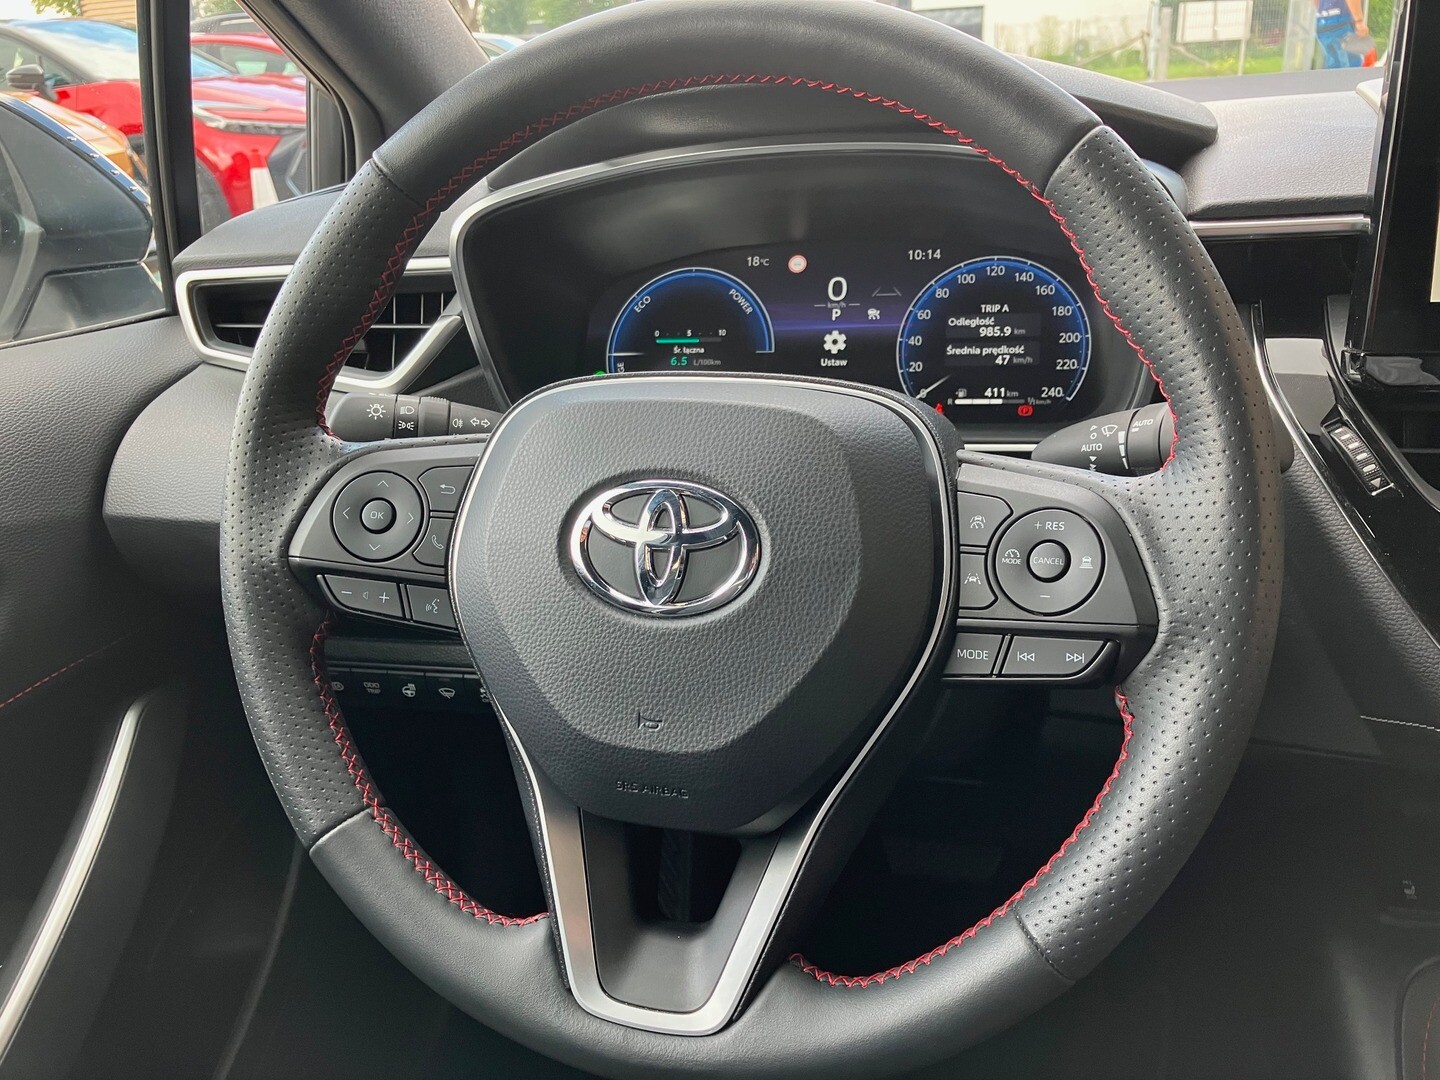 Toyota Corolla